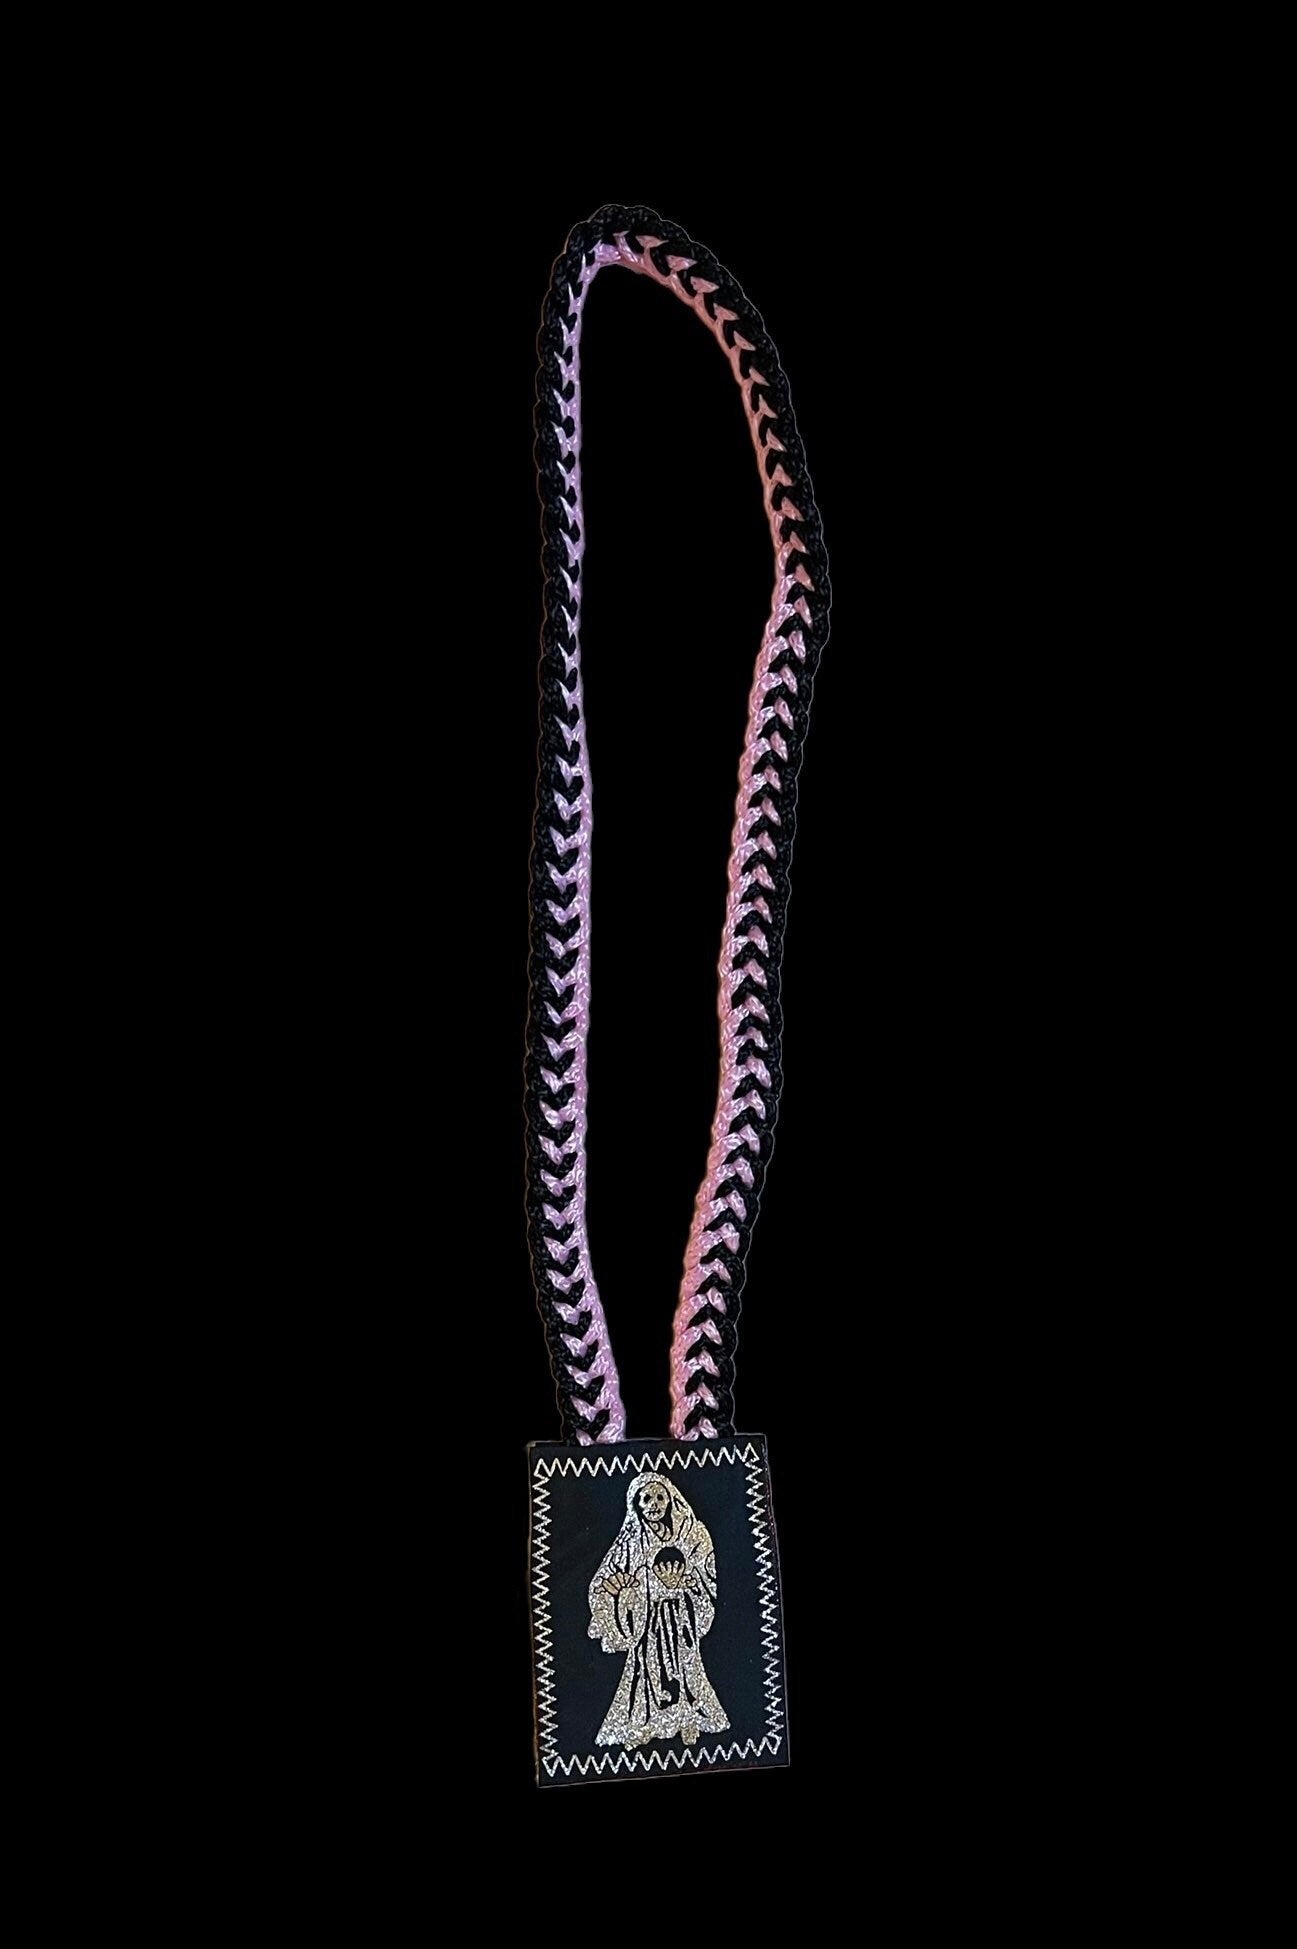 Santa Muerte Escapulario + Pink & Black Rope + Protection + Made in Mexico